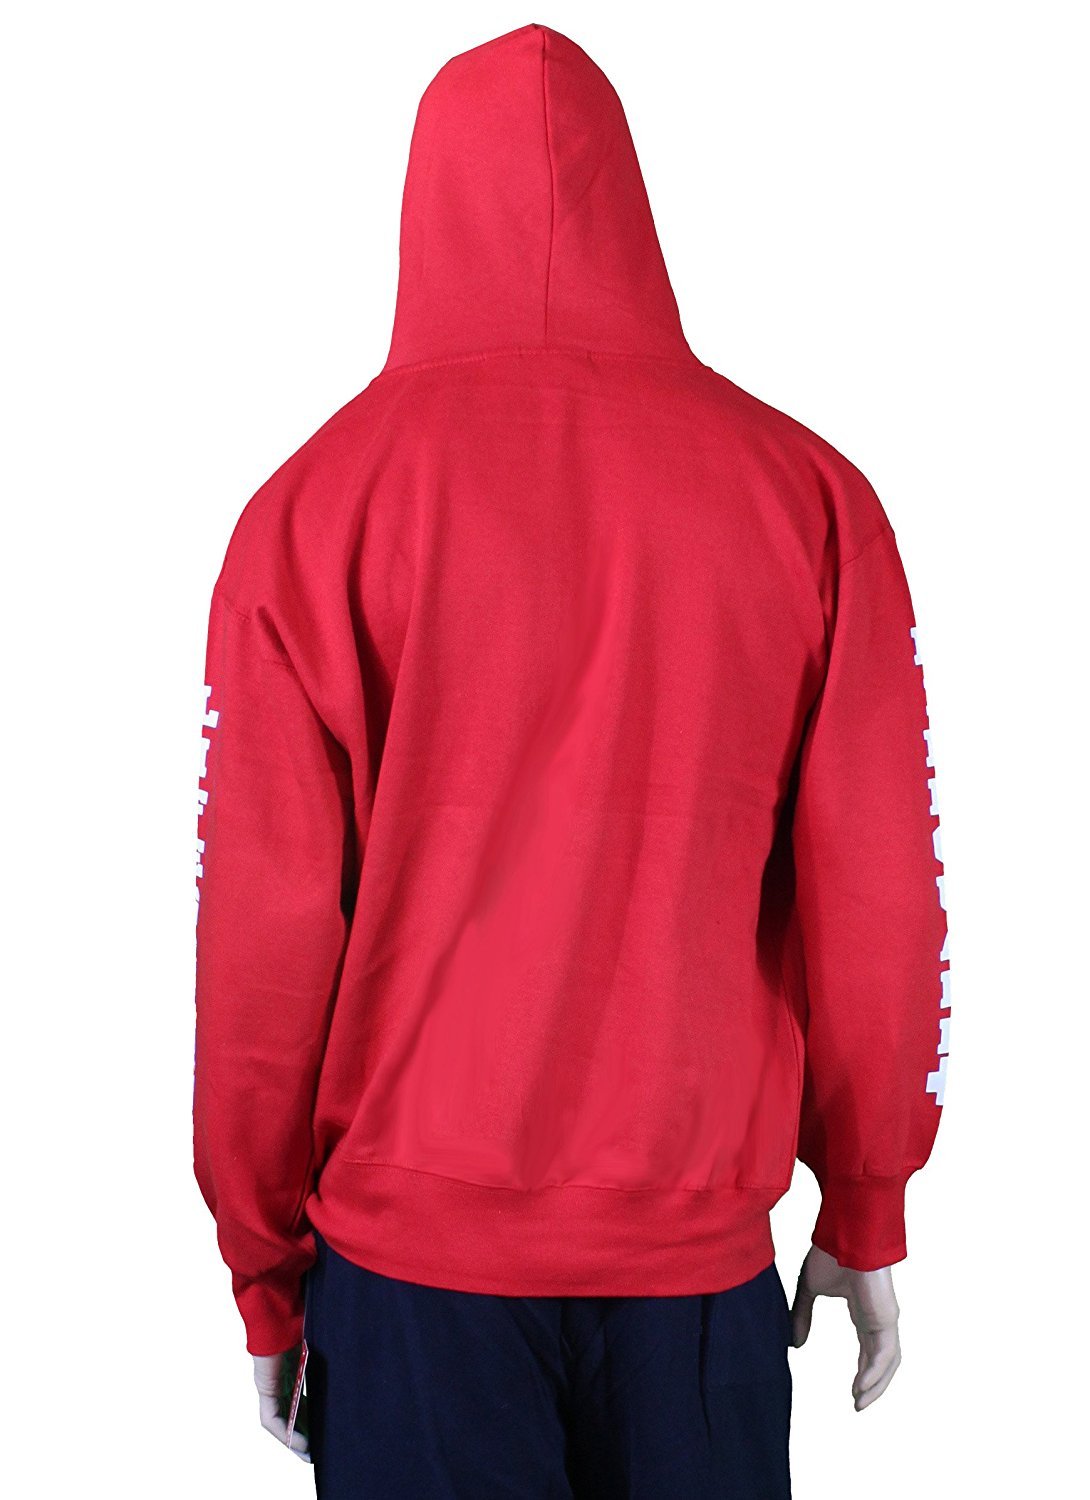 Lifeguard Youth Sweatshirt - Red